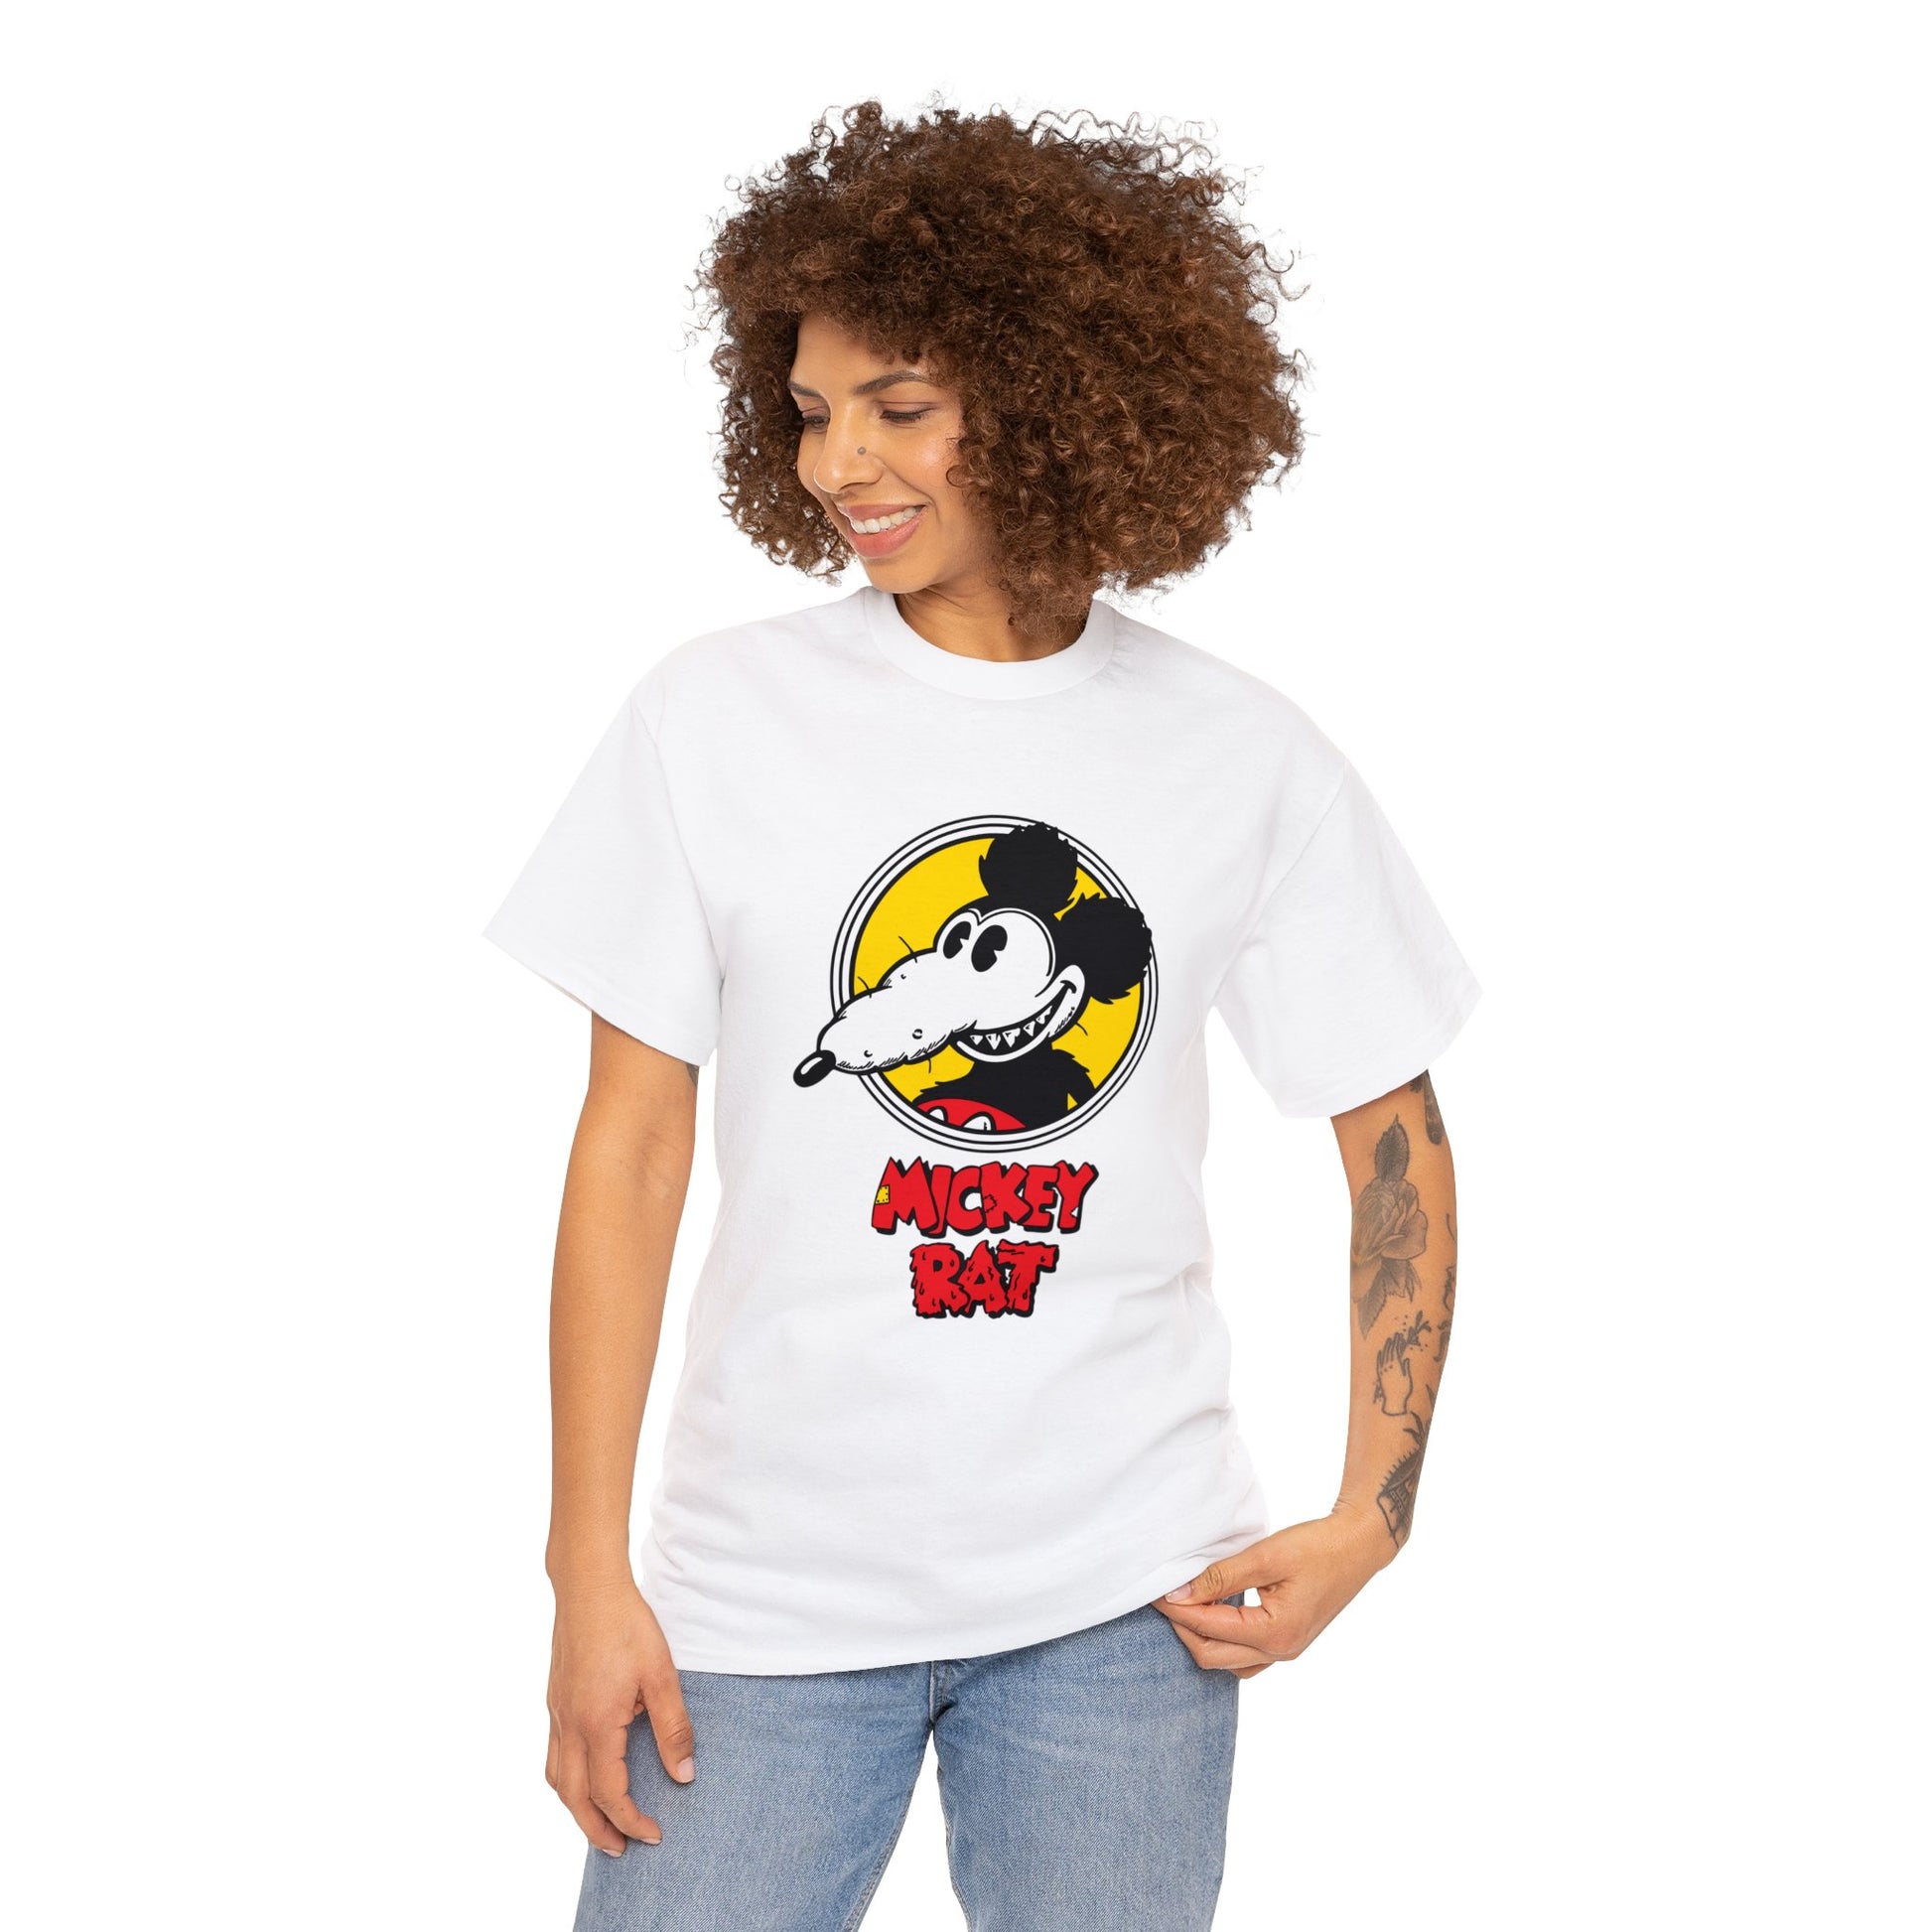 Mickey Rat Underground Comix Cartoon Parody 80s T-shirt for Sale